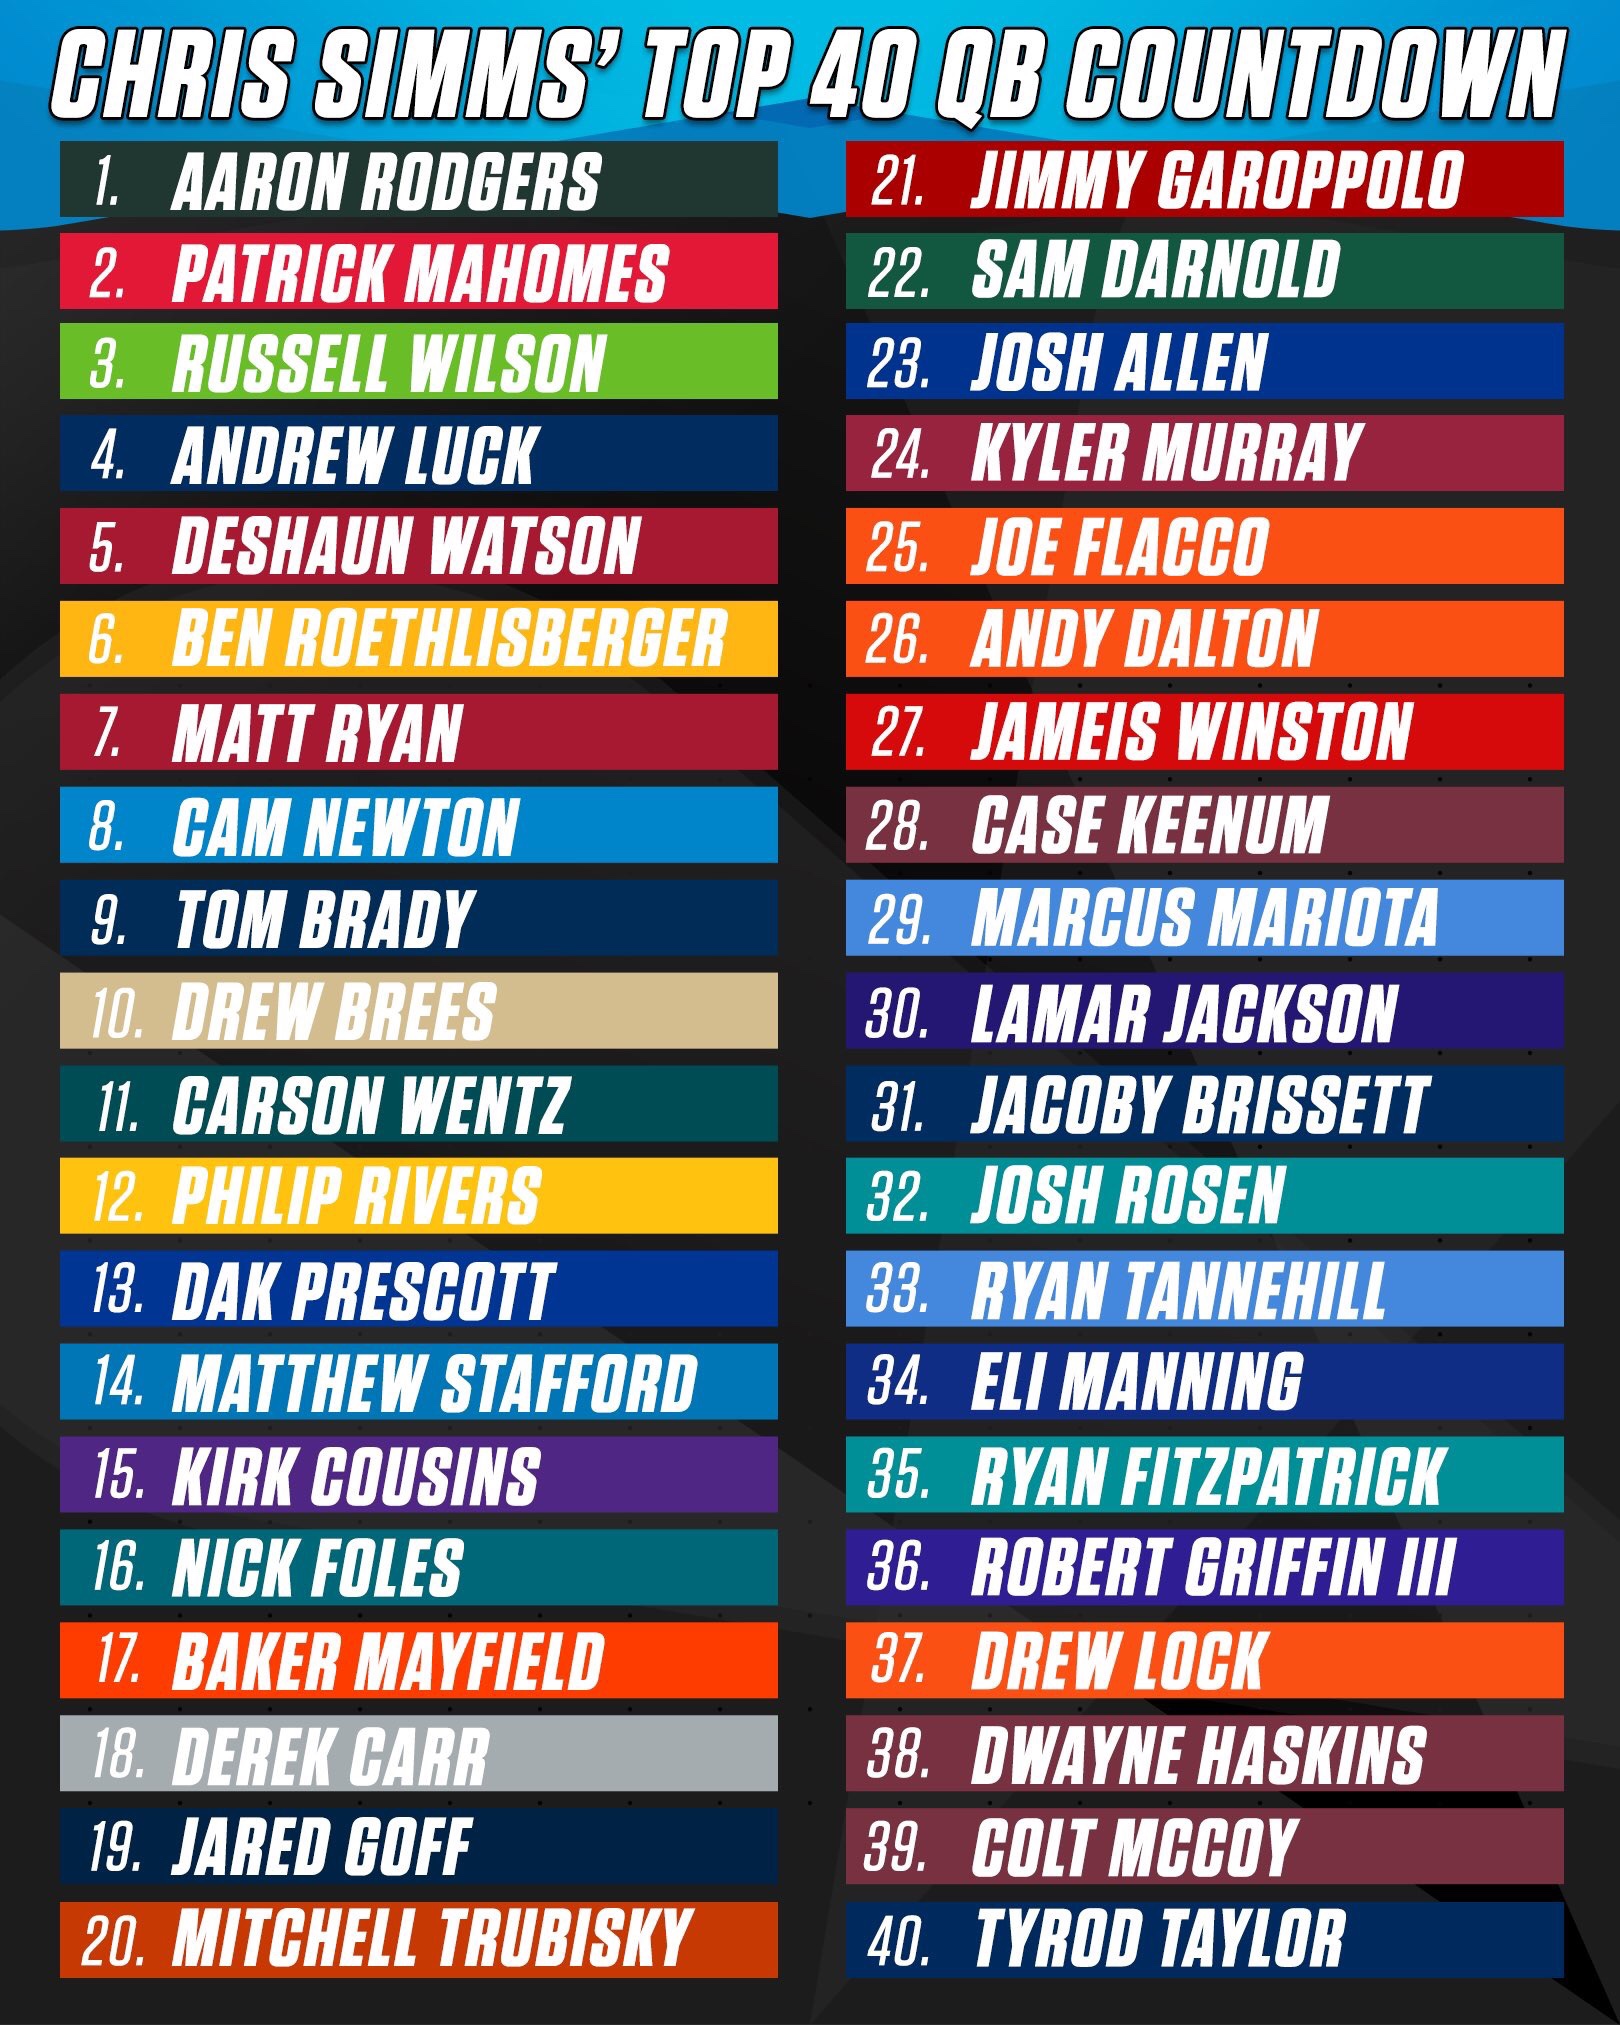 Patriots Chris Simms lists Tom Brady as the ninth best quarterback in